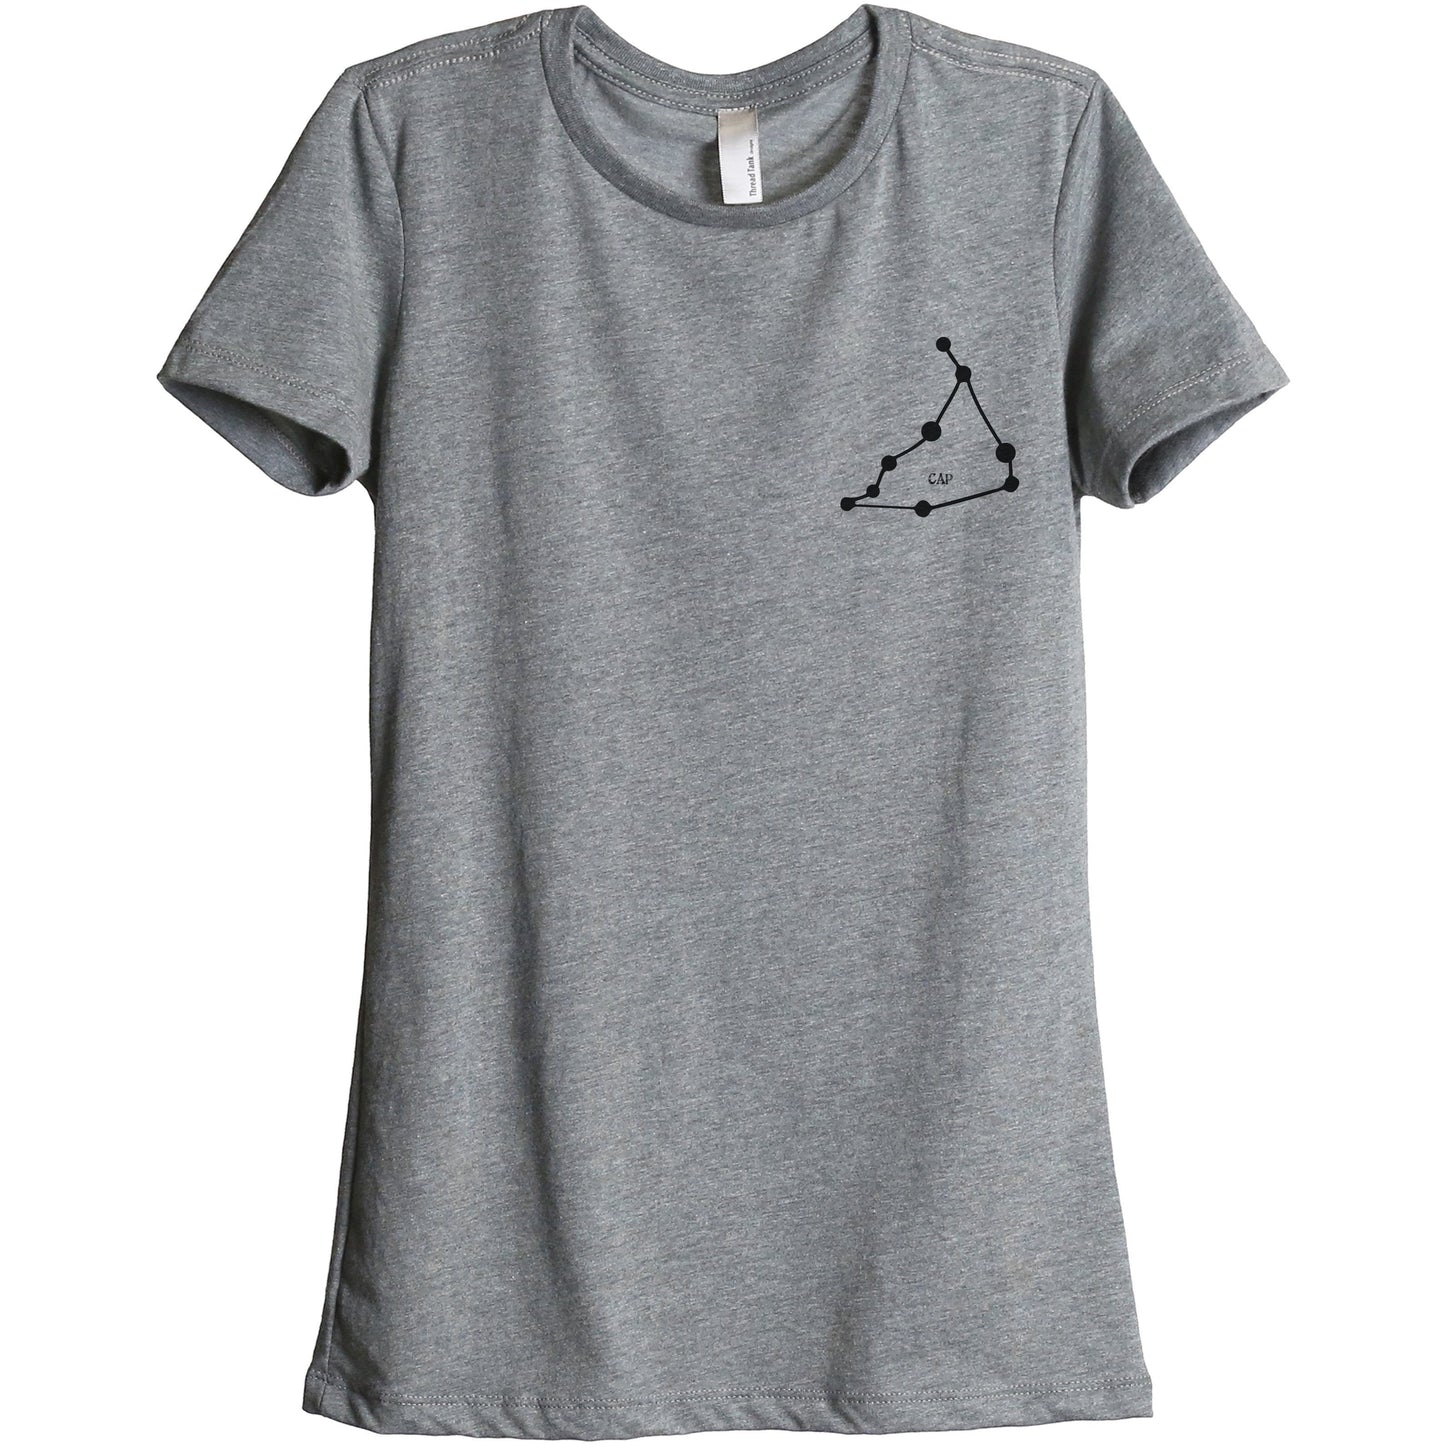 Capricorn CAP Constellation Astrology Women's Relaxed Crewneck T-Shirt Top Tee Heather Grey